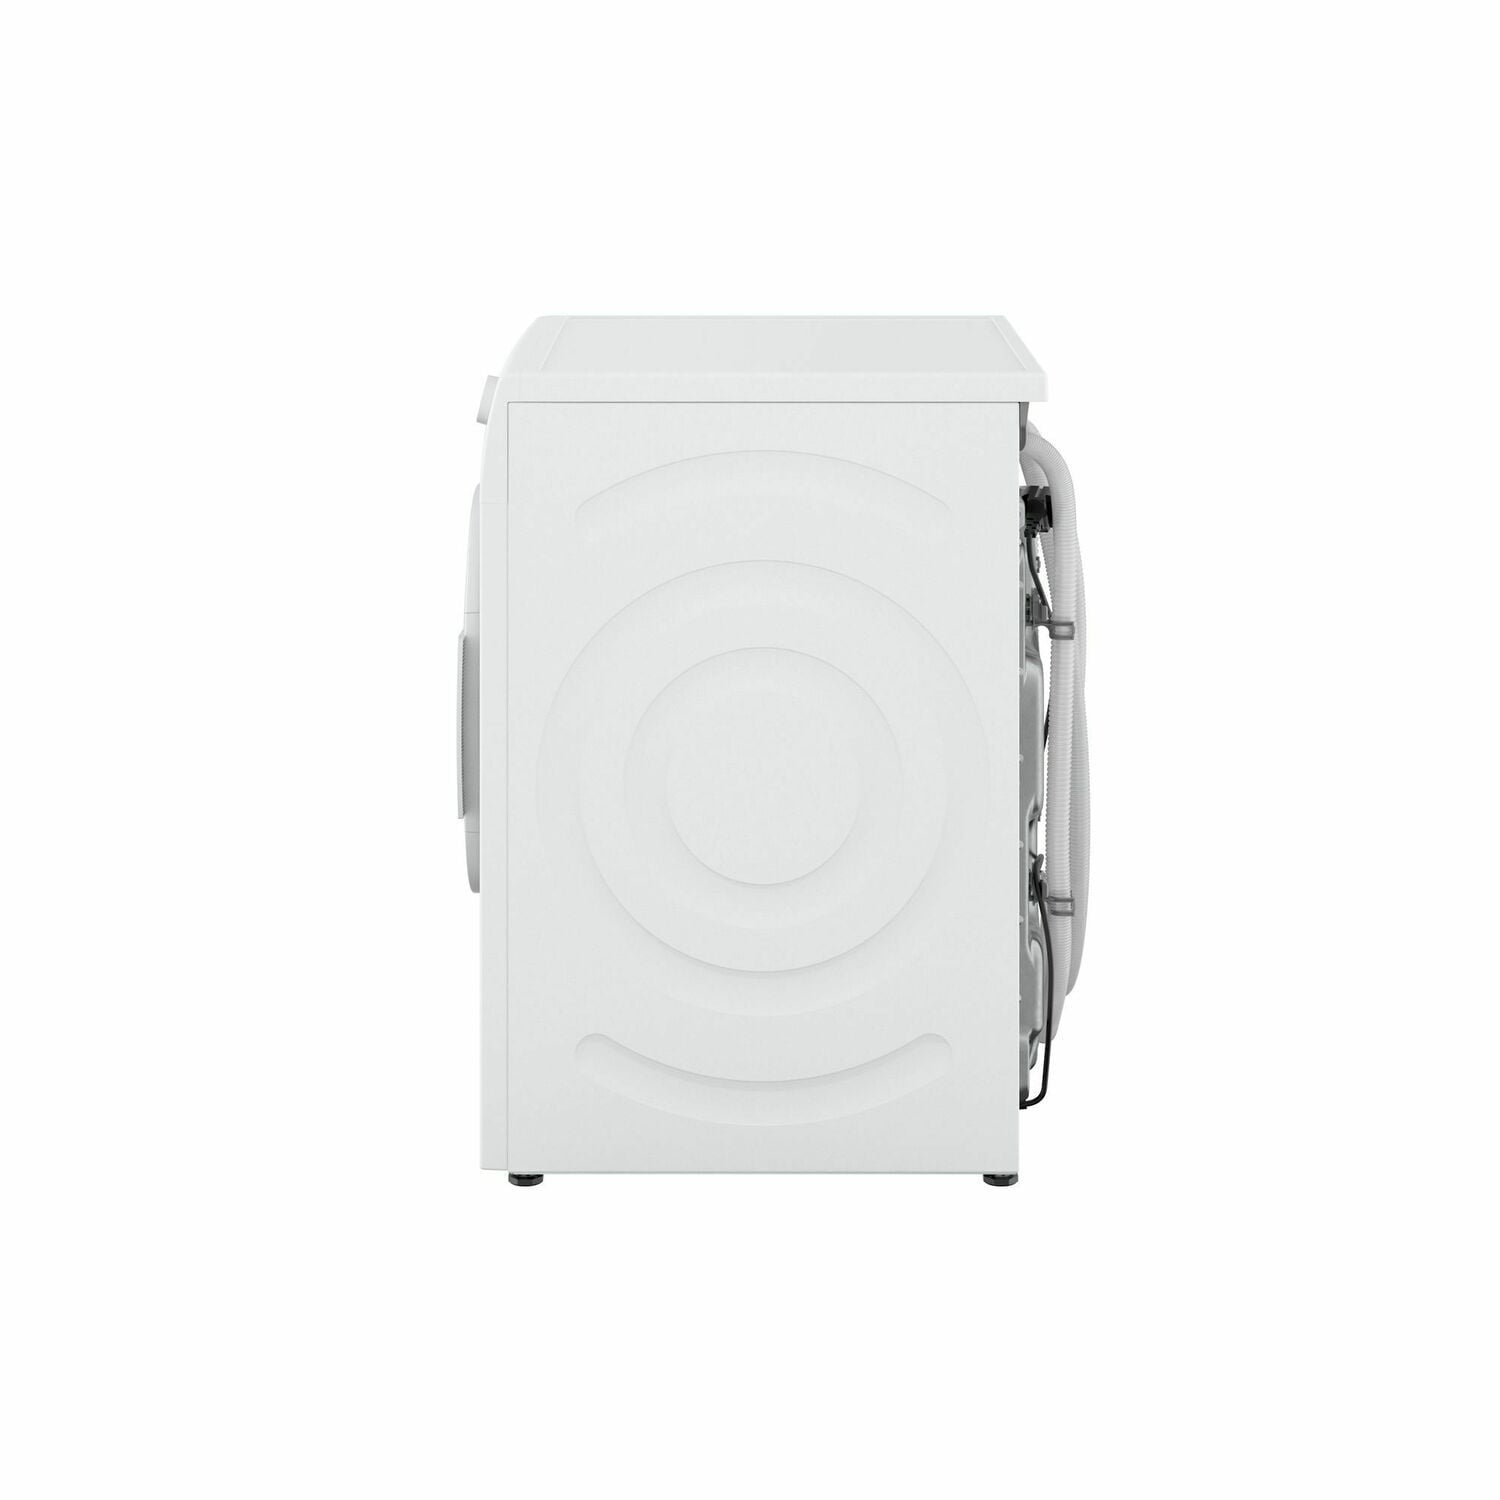 Bosch WAT28400UC 300 2.2 pies cúbicos Lavadora de carga frontal apilable  blanca - Energy Star : Electrodomésticos 